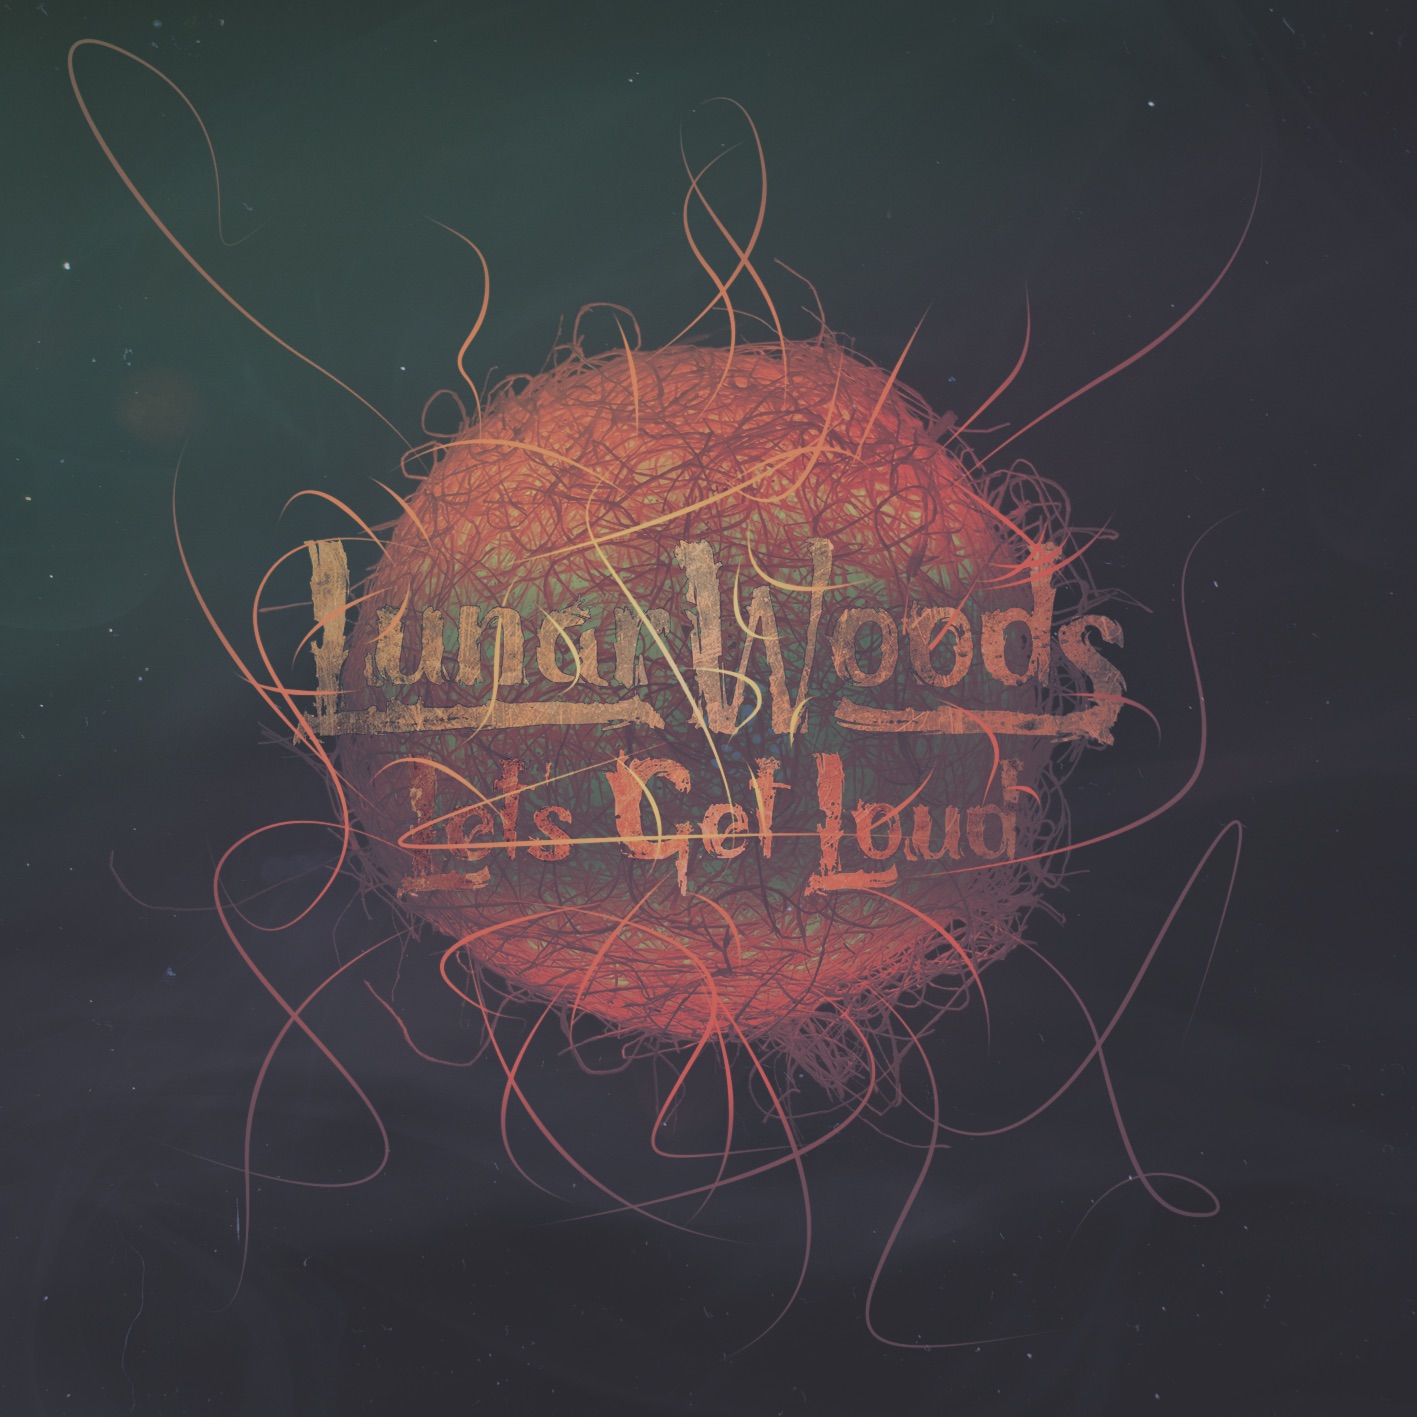  Lunar Woods – “Let’s Get Loud”